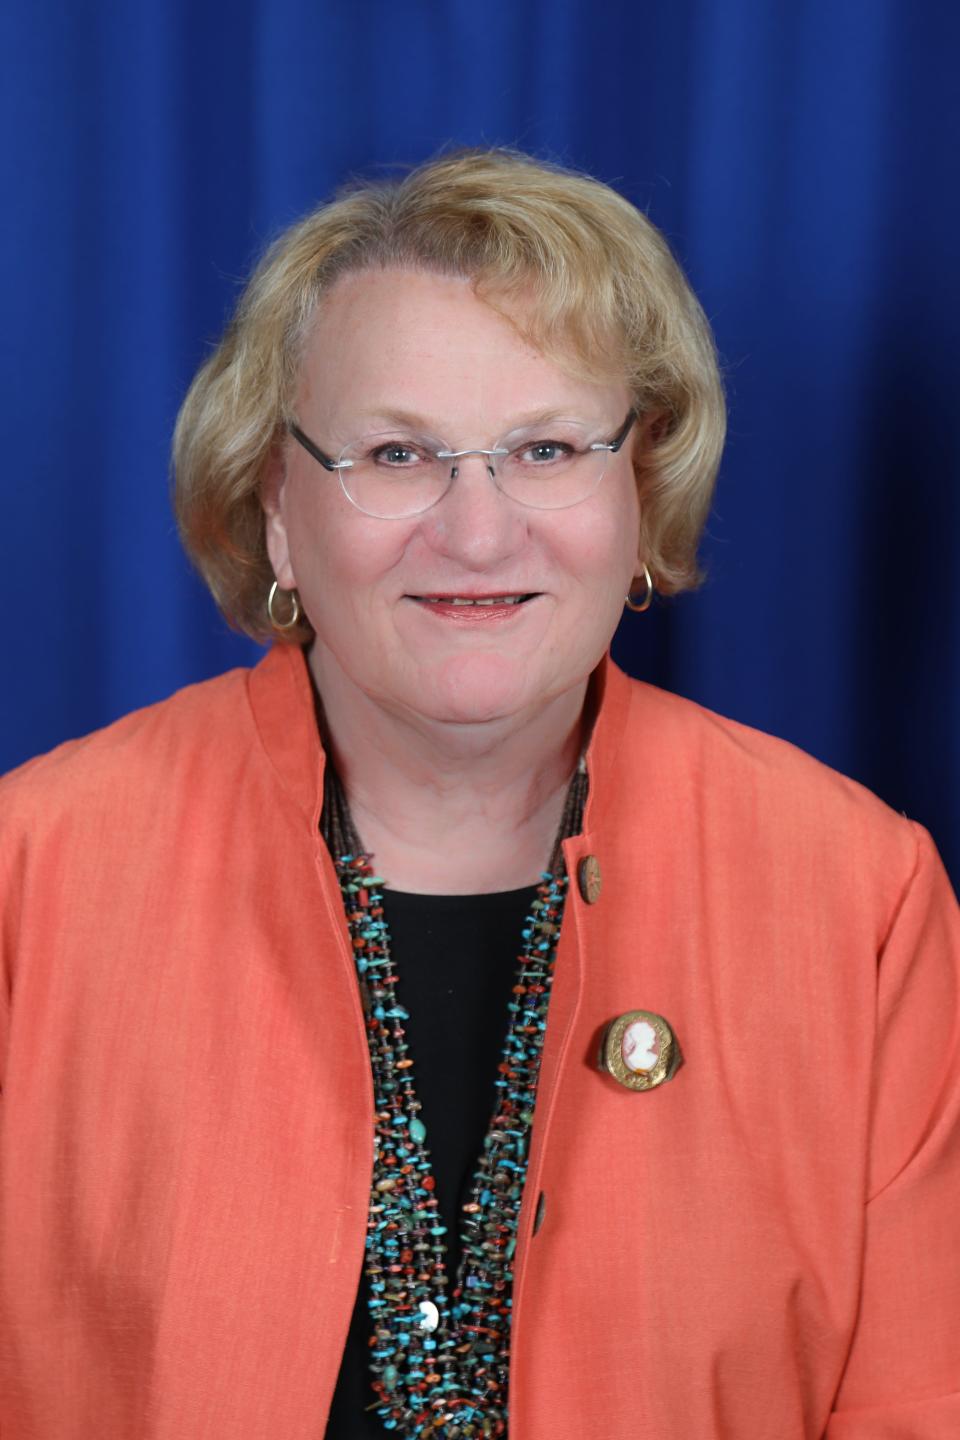 Palm Springs City Council member Lisa Middleton